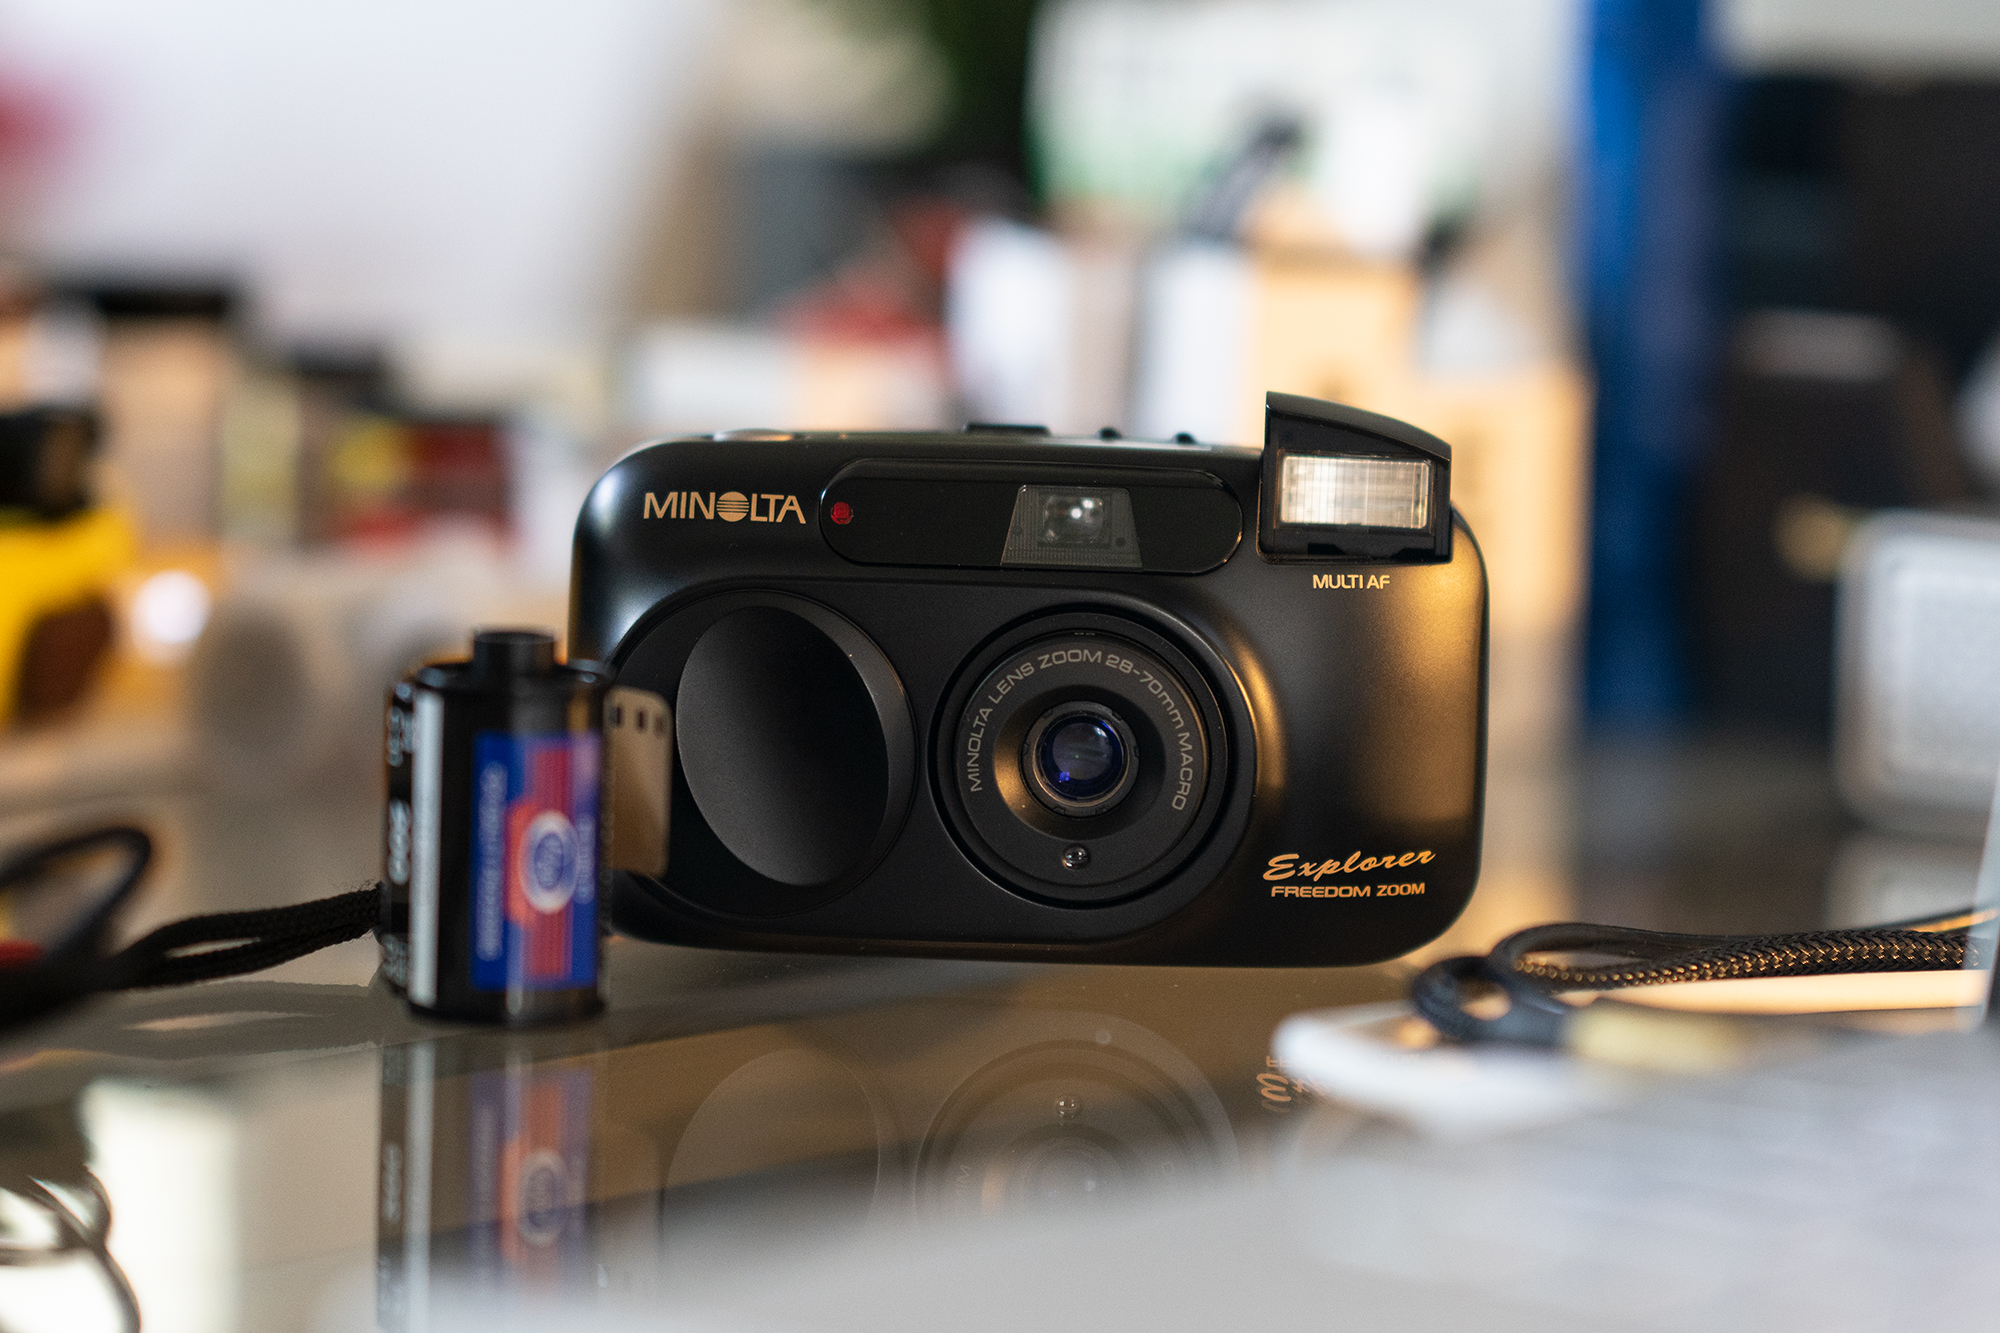 Minolta Explorer point and shoot 35mm camera